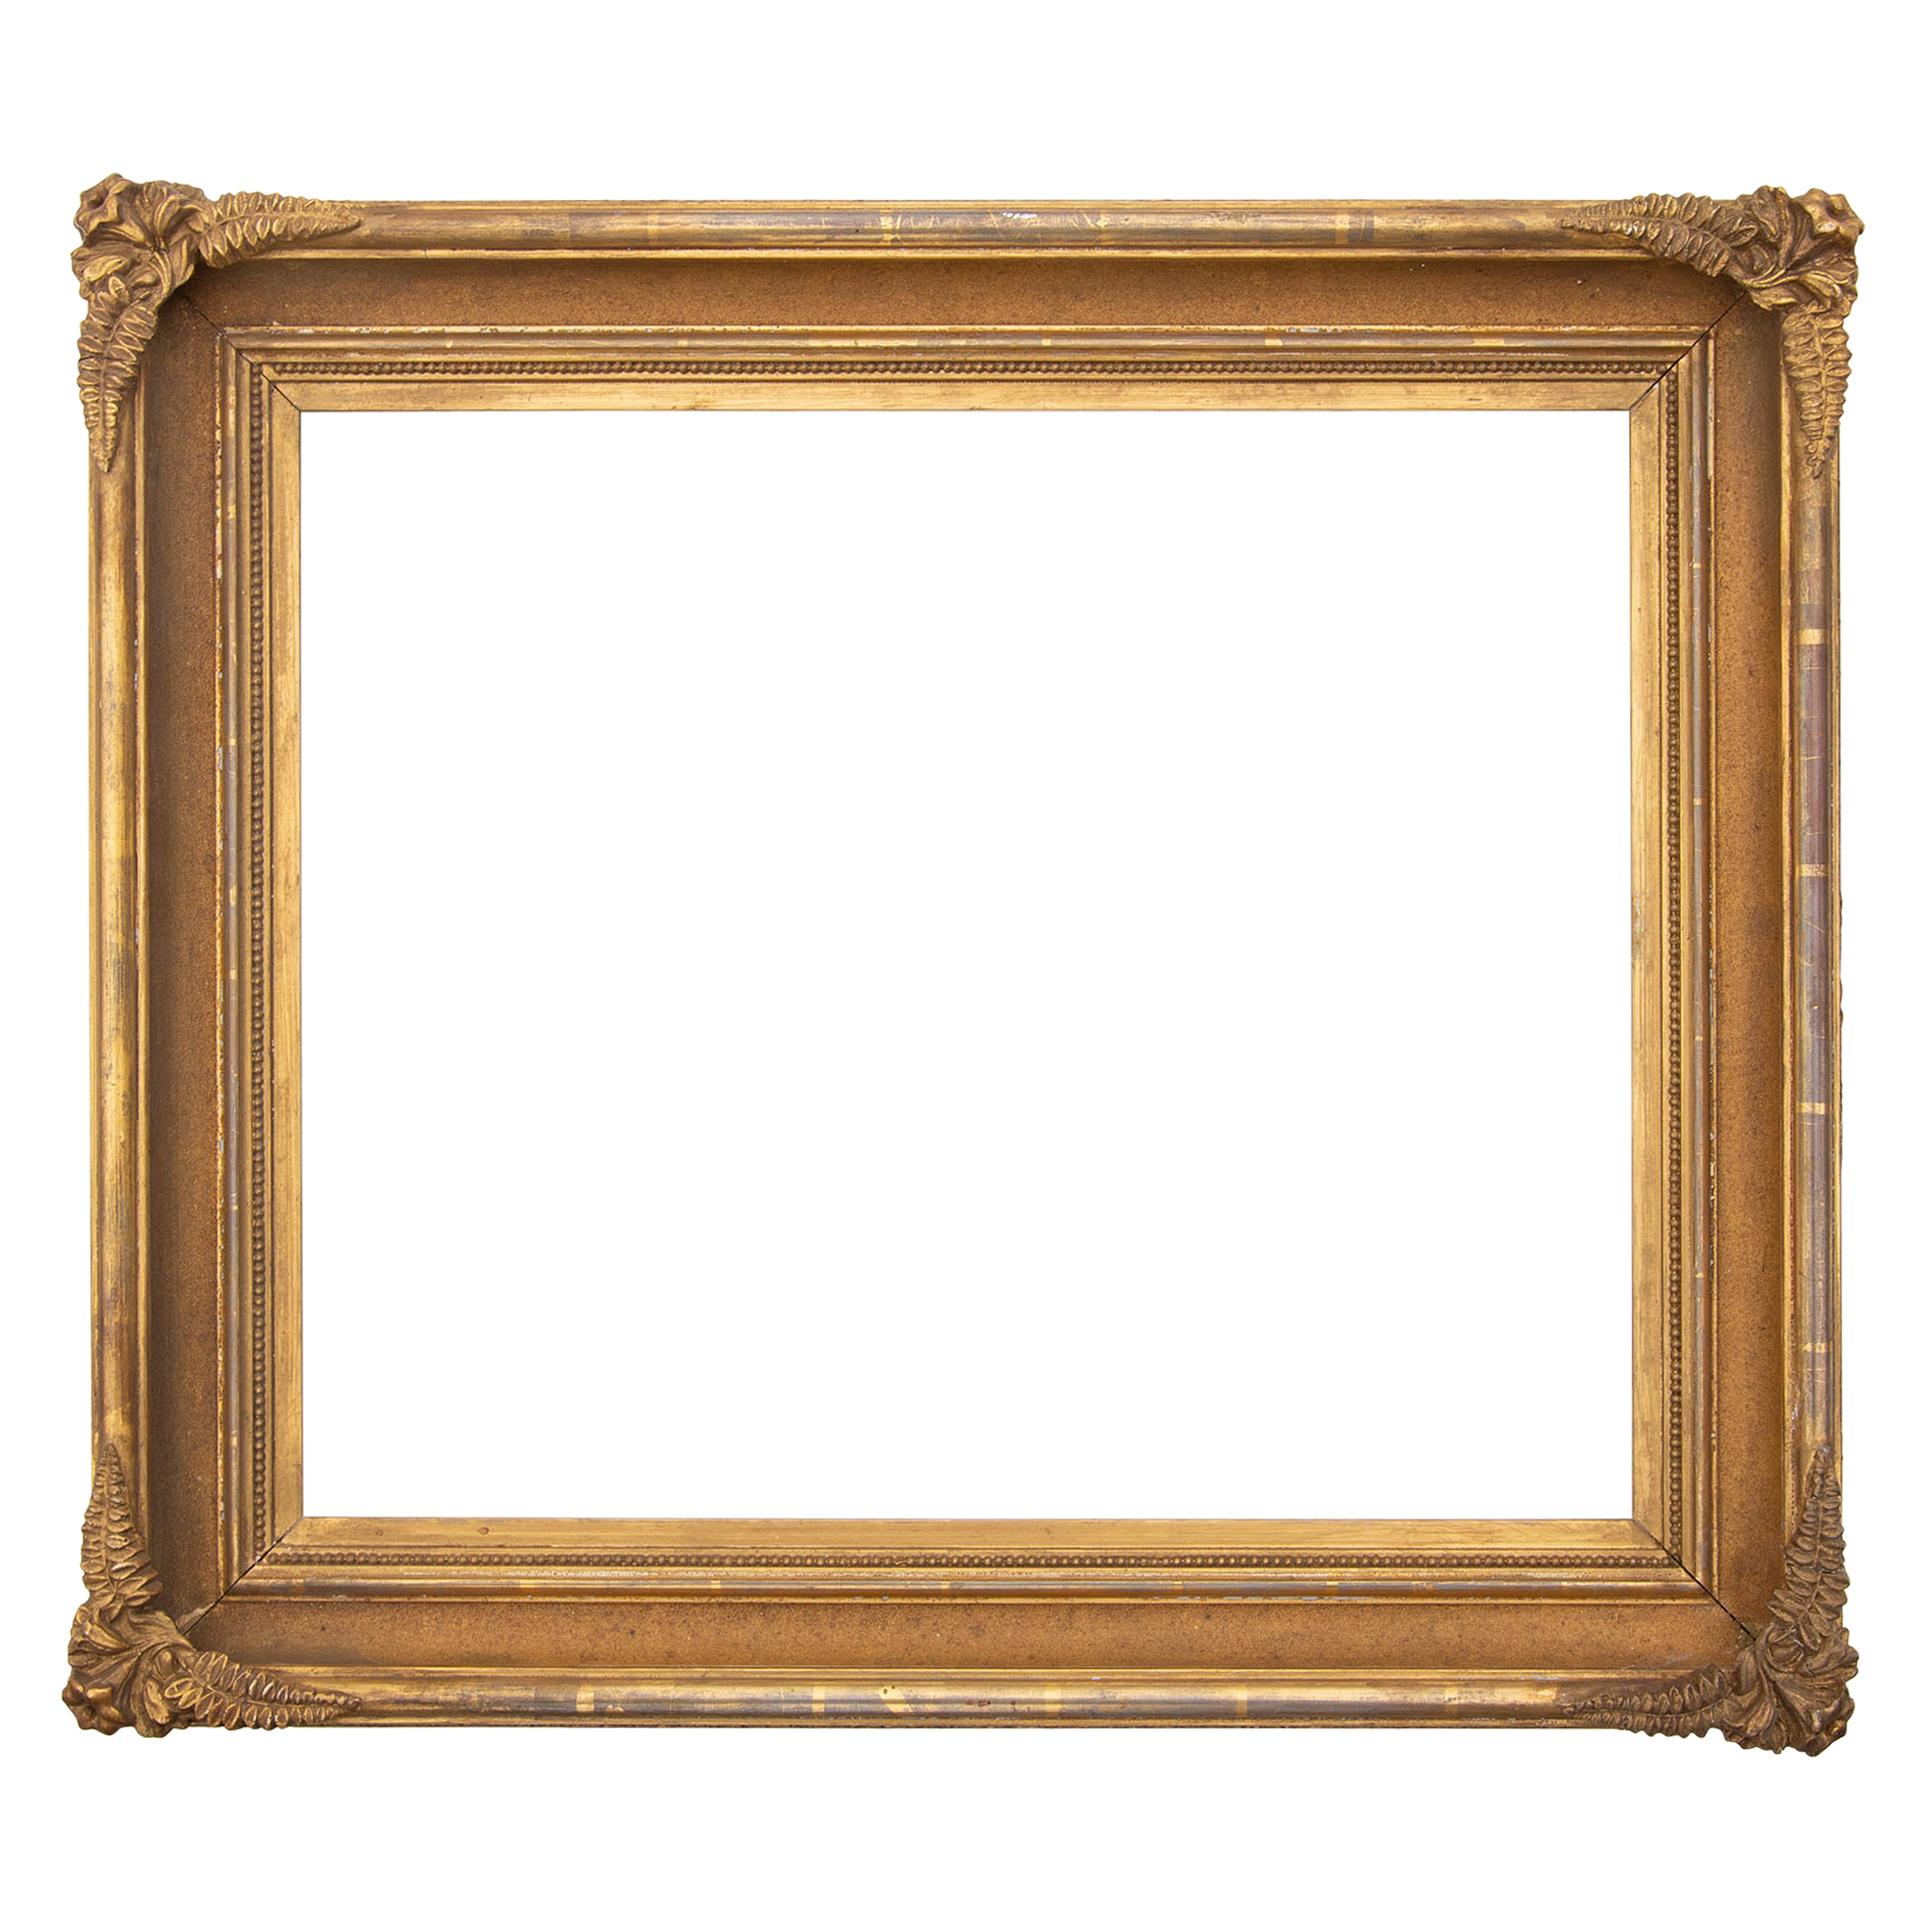 19th Century American Gilt Frame